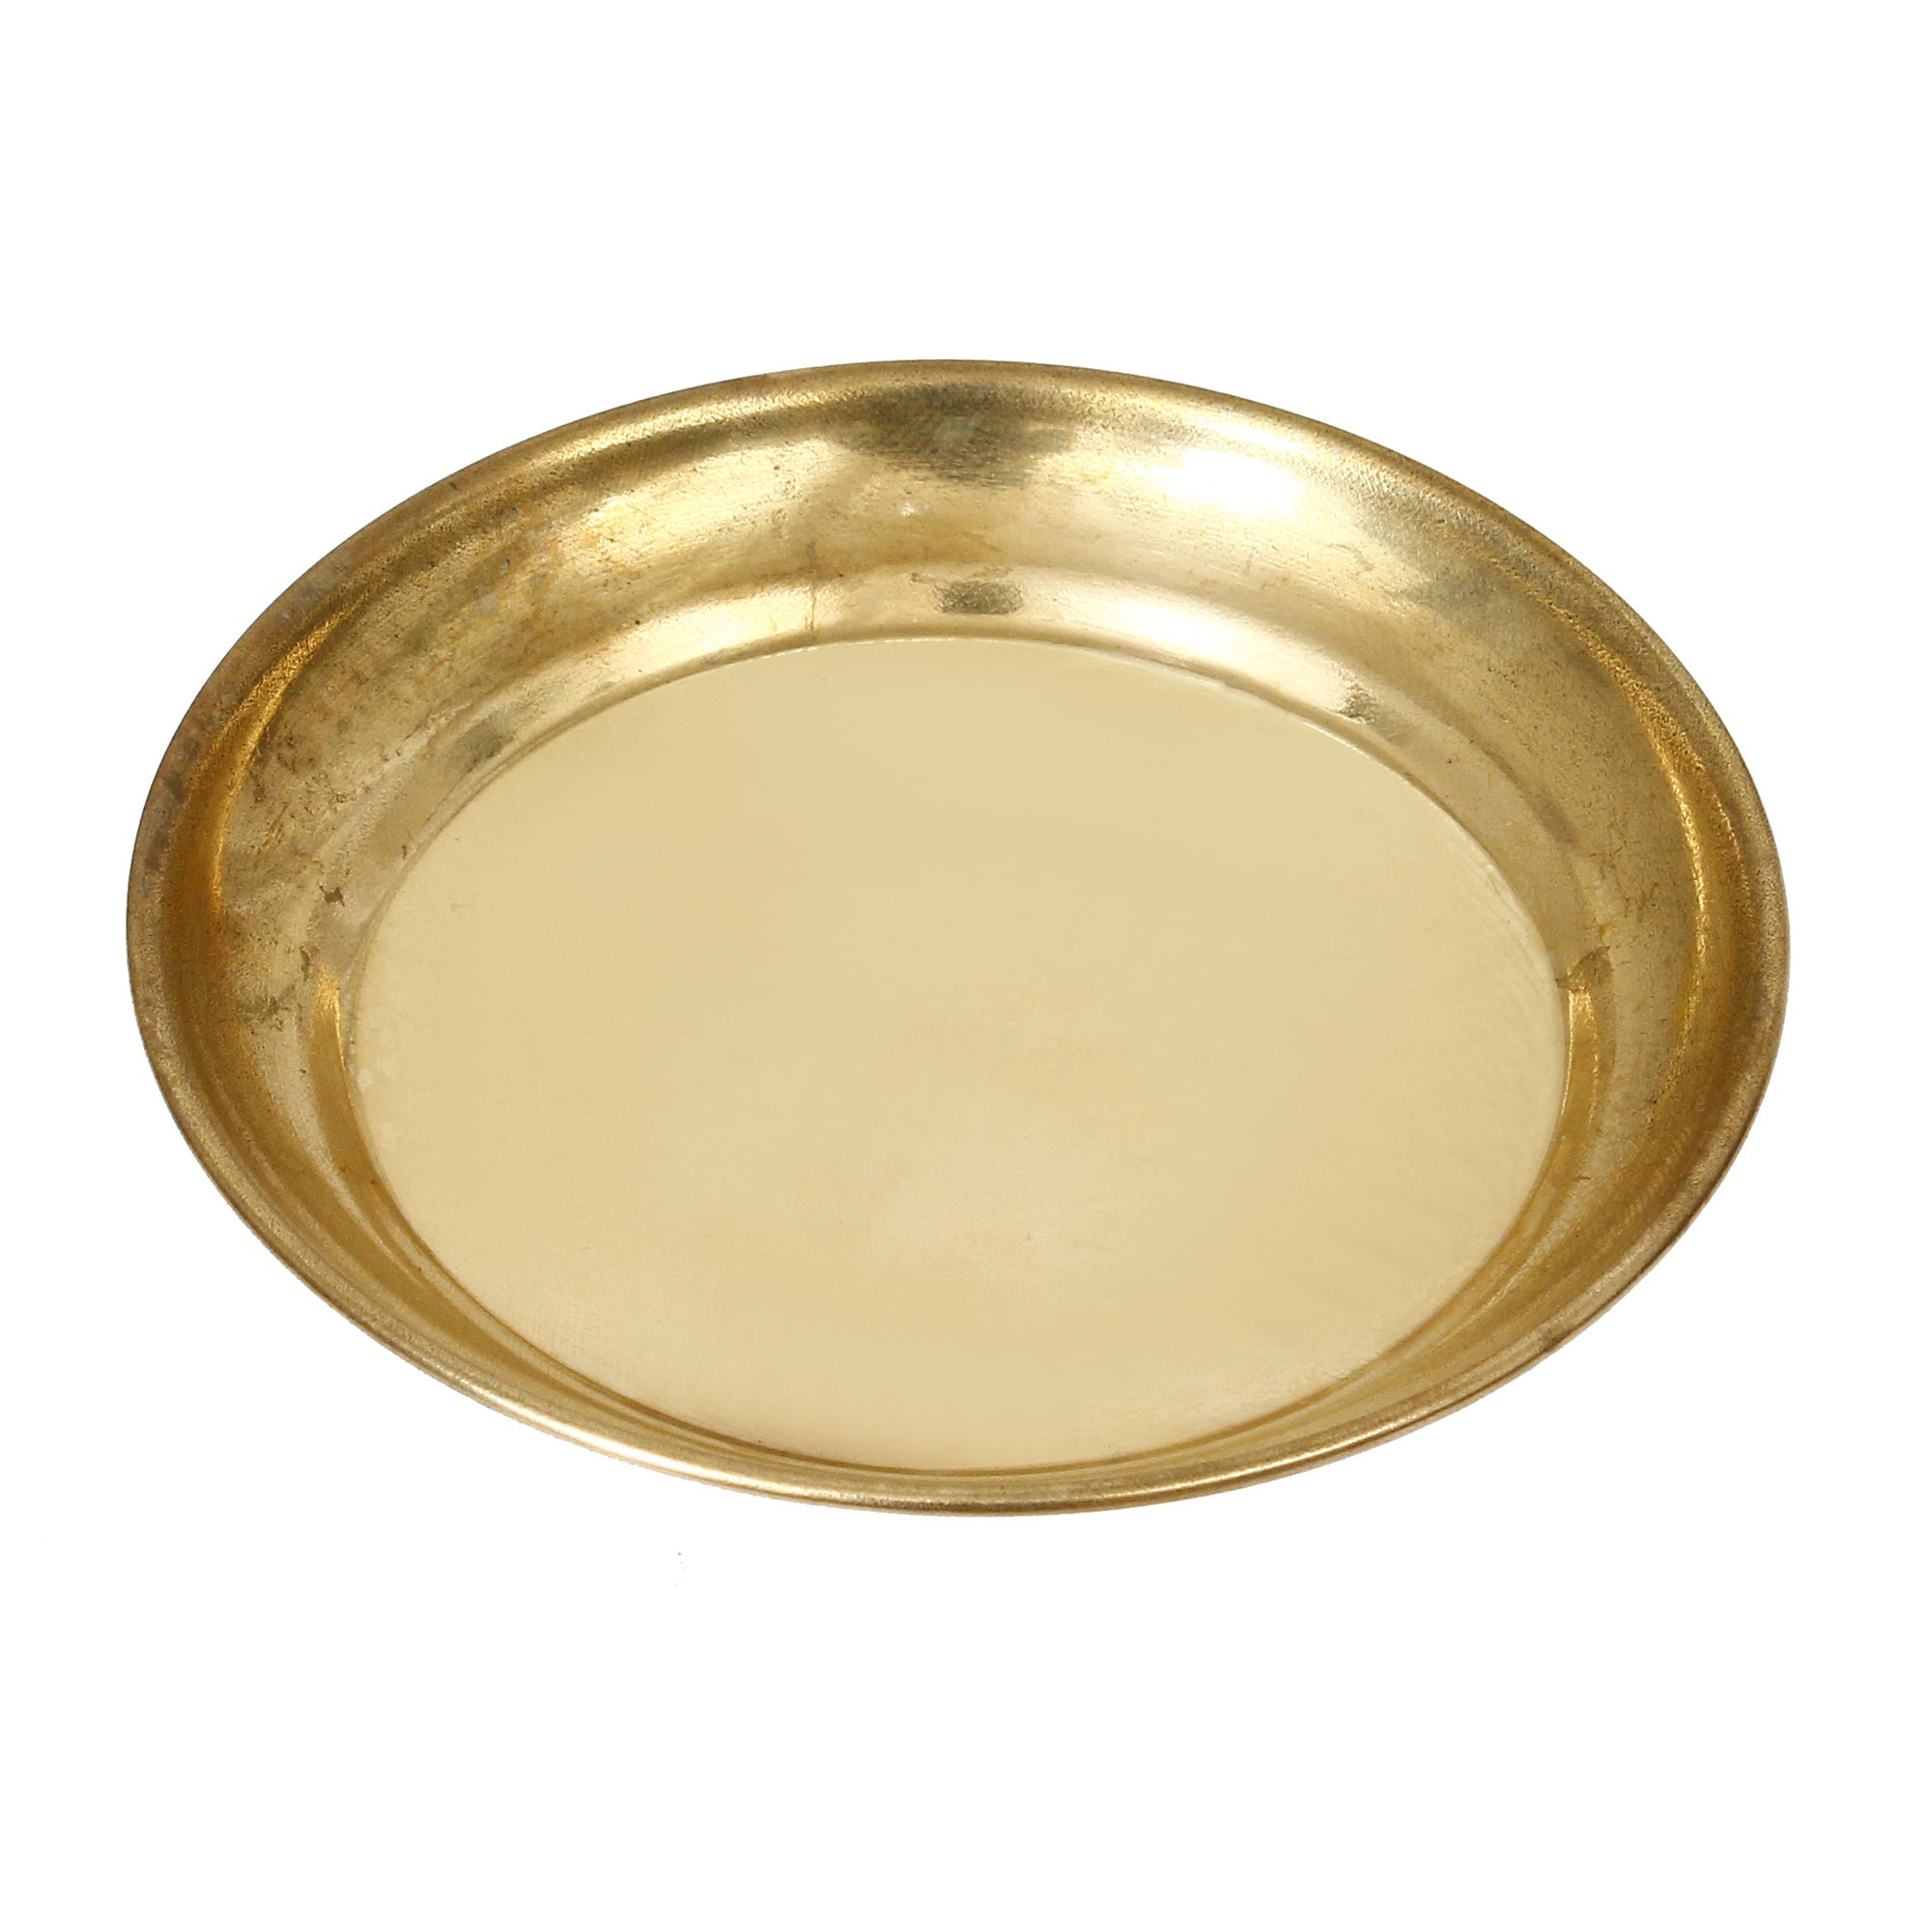 5 Inch Brass Pooja Thali with 2 Katori/Bowls, 1 Spoon and 1 Glass 4